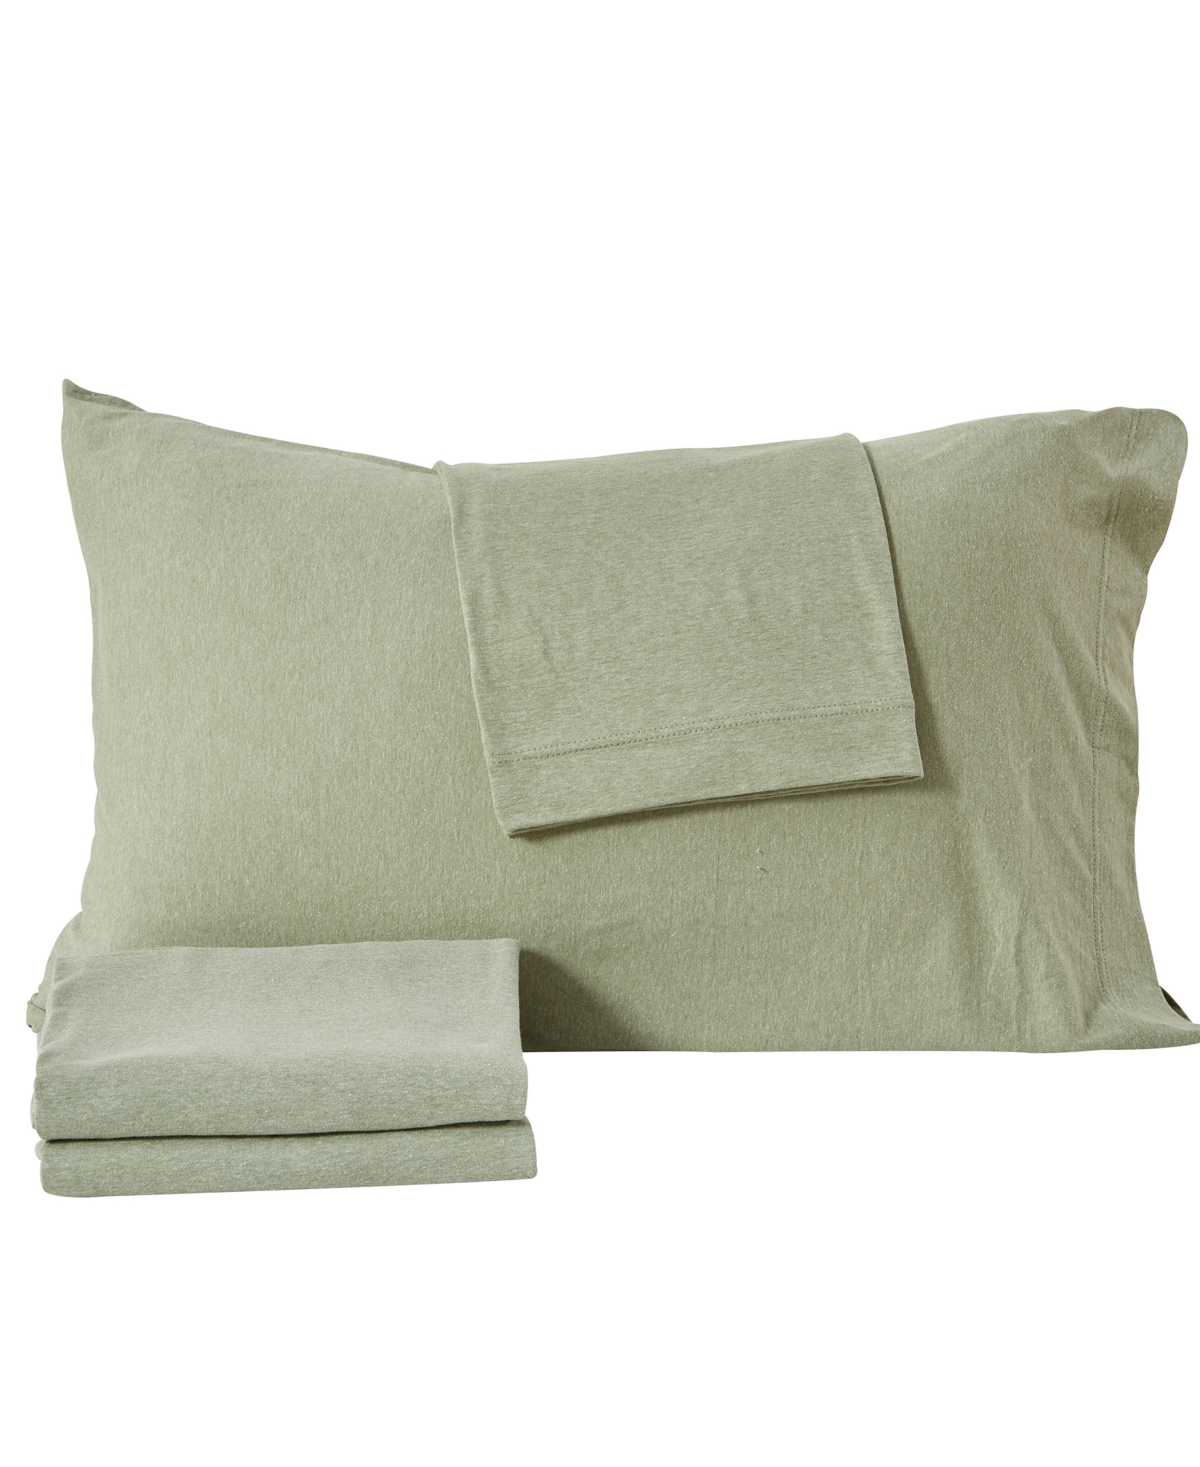 Premium Comforts Heathered Melange T-shirt Jersey Knit Cotton Blend 4 Piece Sheet Set, King In Heathered Eucalyptus